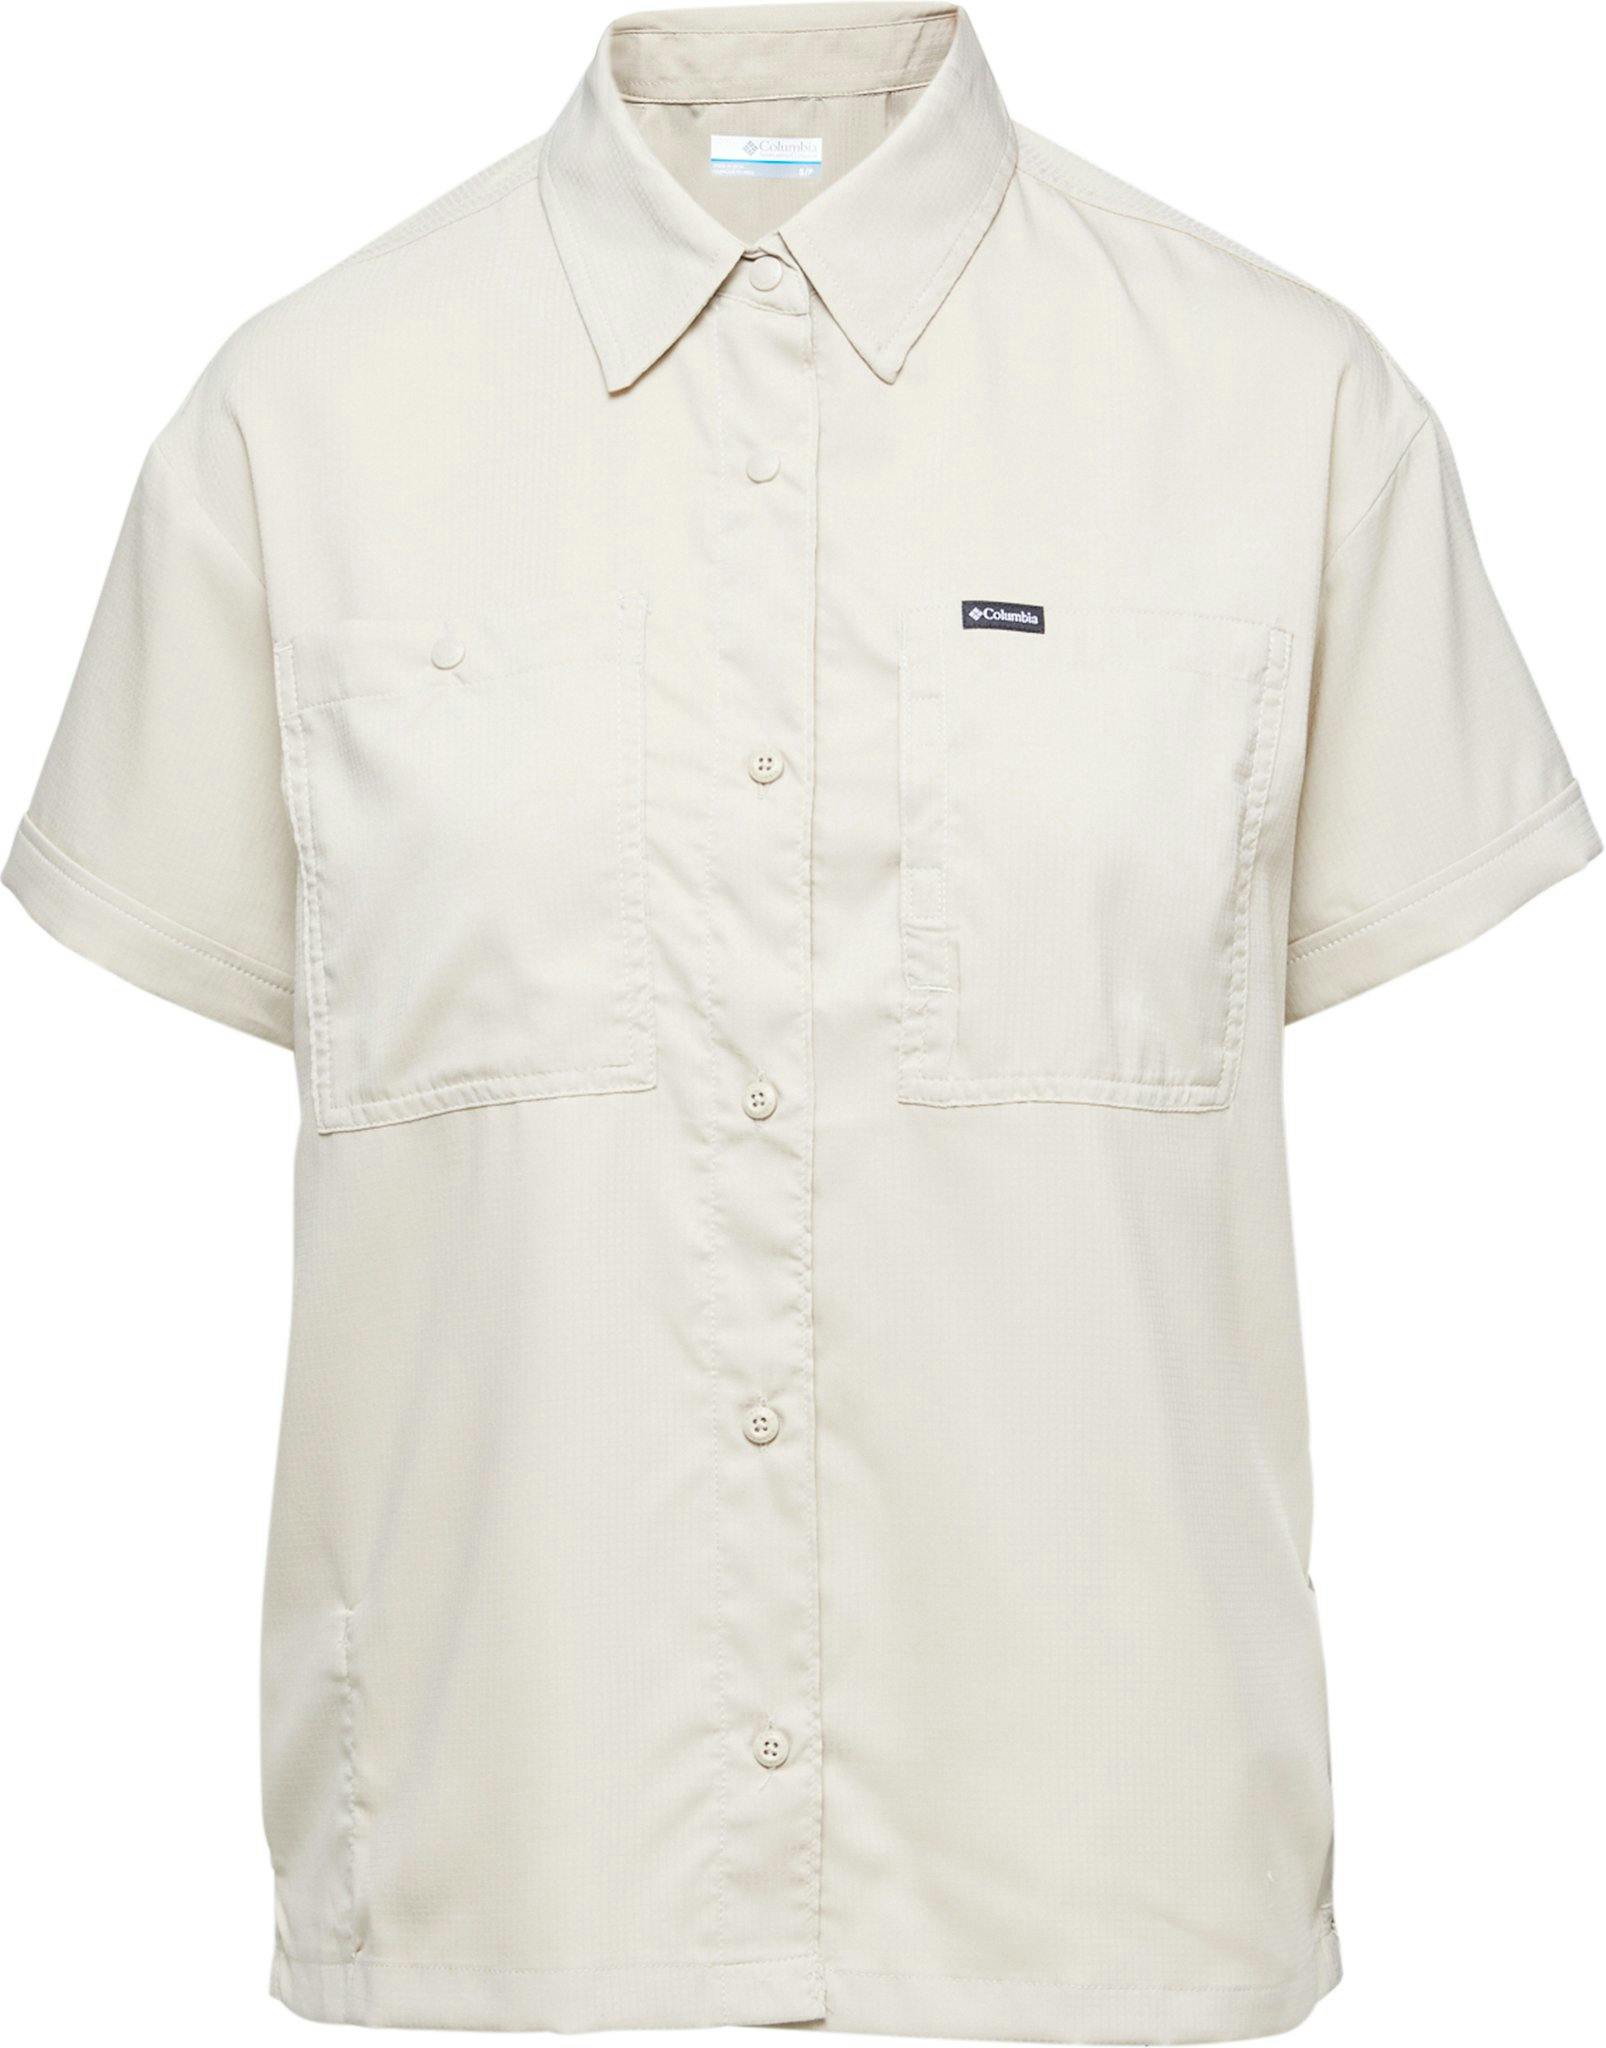 Product image for Silver Ridge Utility™ Short Sleeve Shirt - Women's